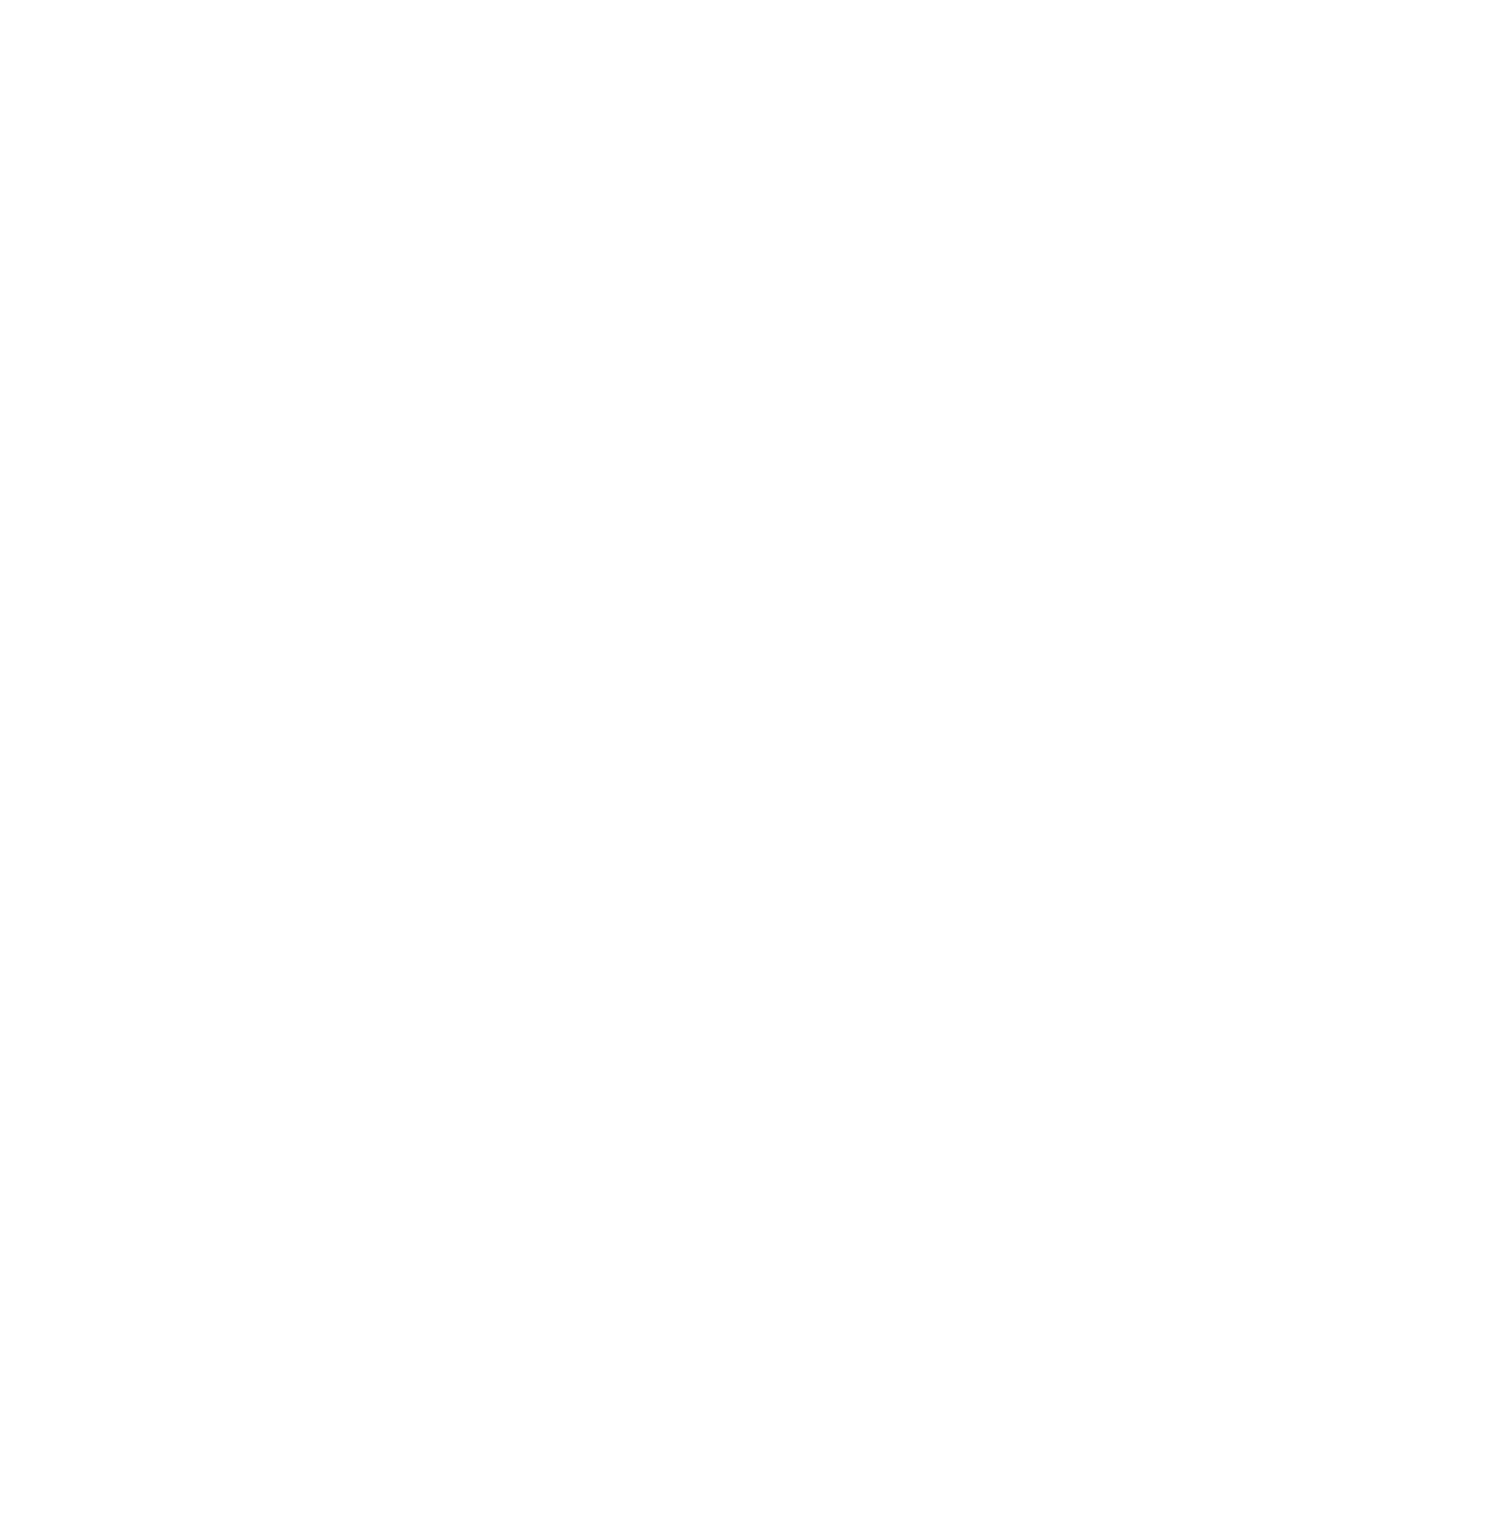 Groupon logo for dark backgrounds (transparent PNG)